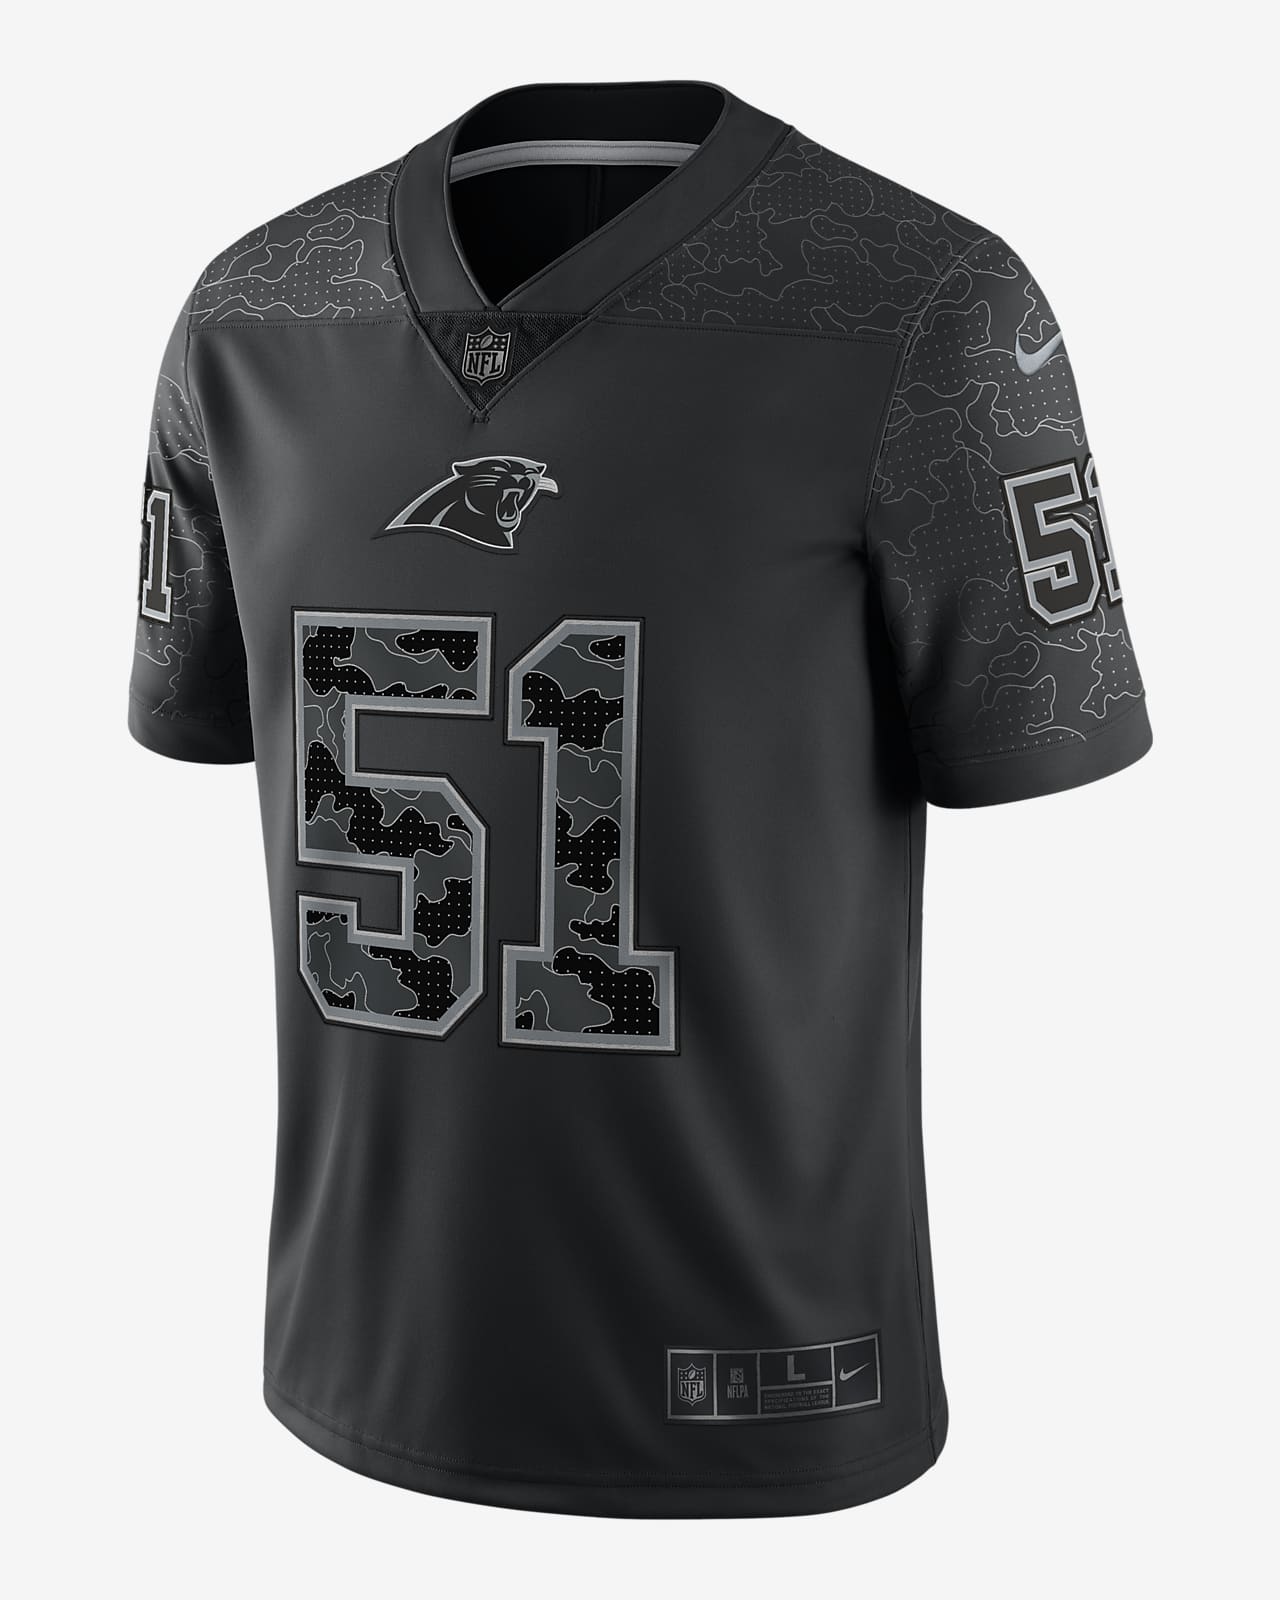 Jersey de fútbol americano a la moda para hombre Carolina Panthers RFLCTV de la NFL (Sam Mills)